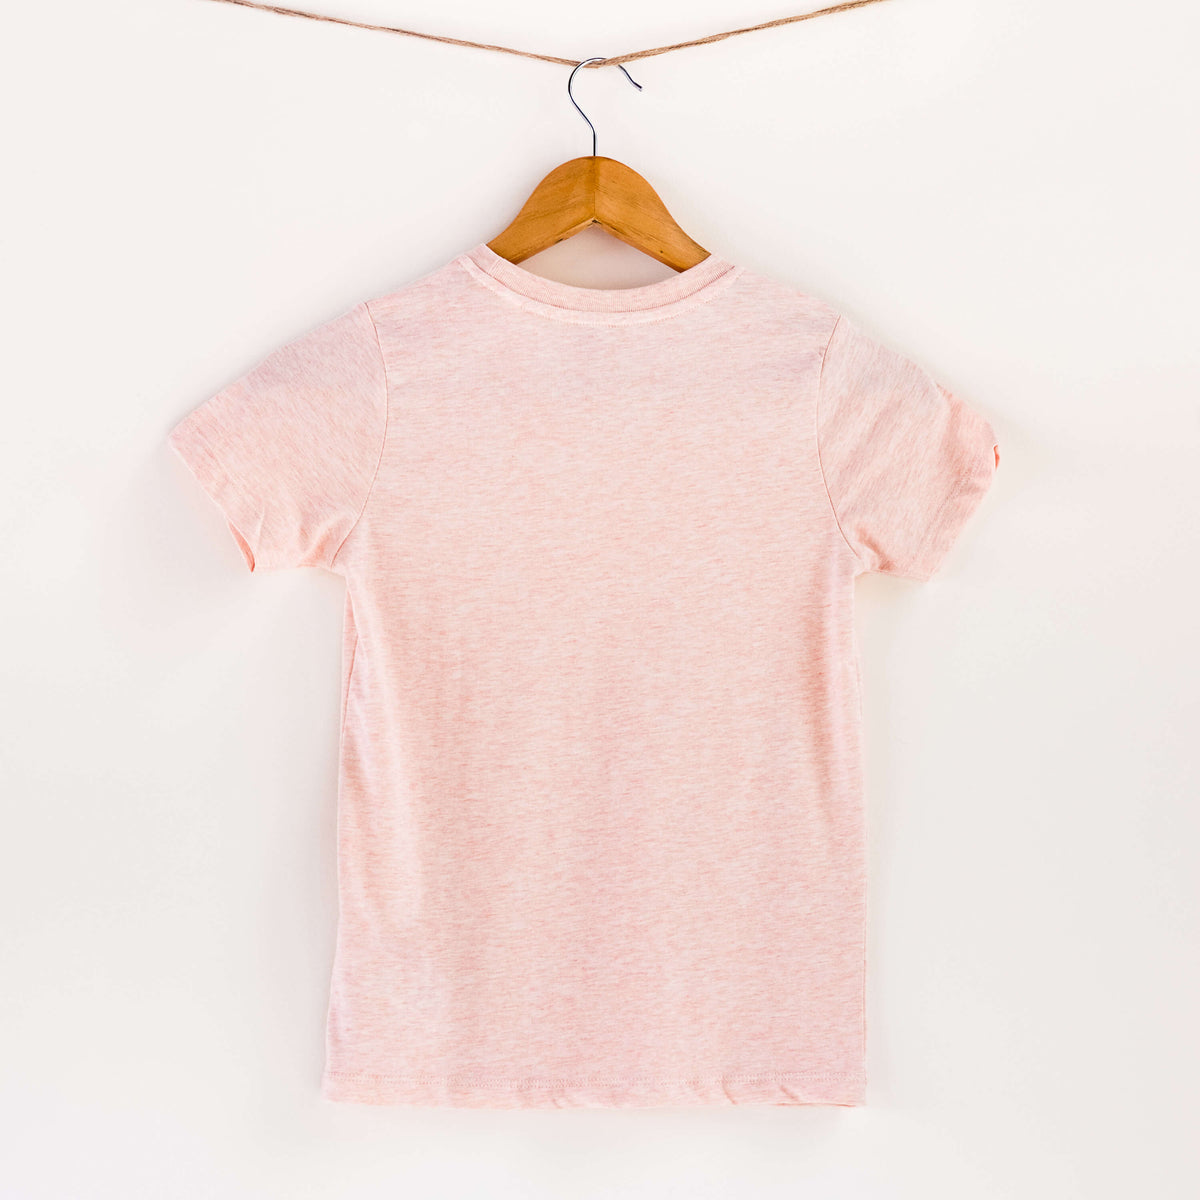 Camiseta rosa de algodón orgánico para niños, estampado a mano con tintas ecológicas. Modelo unisex.